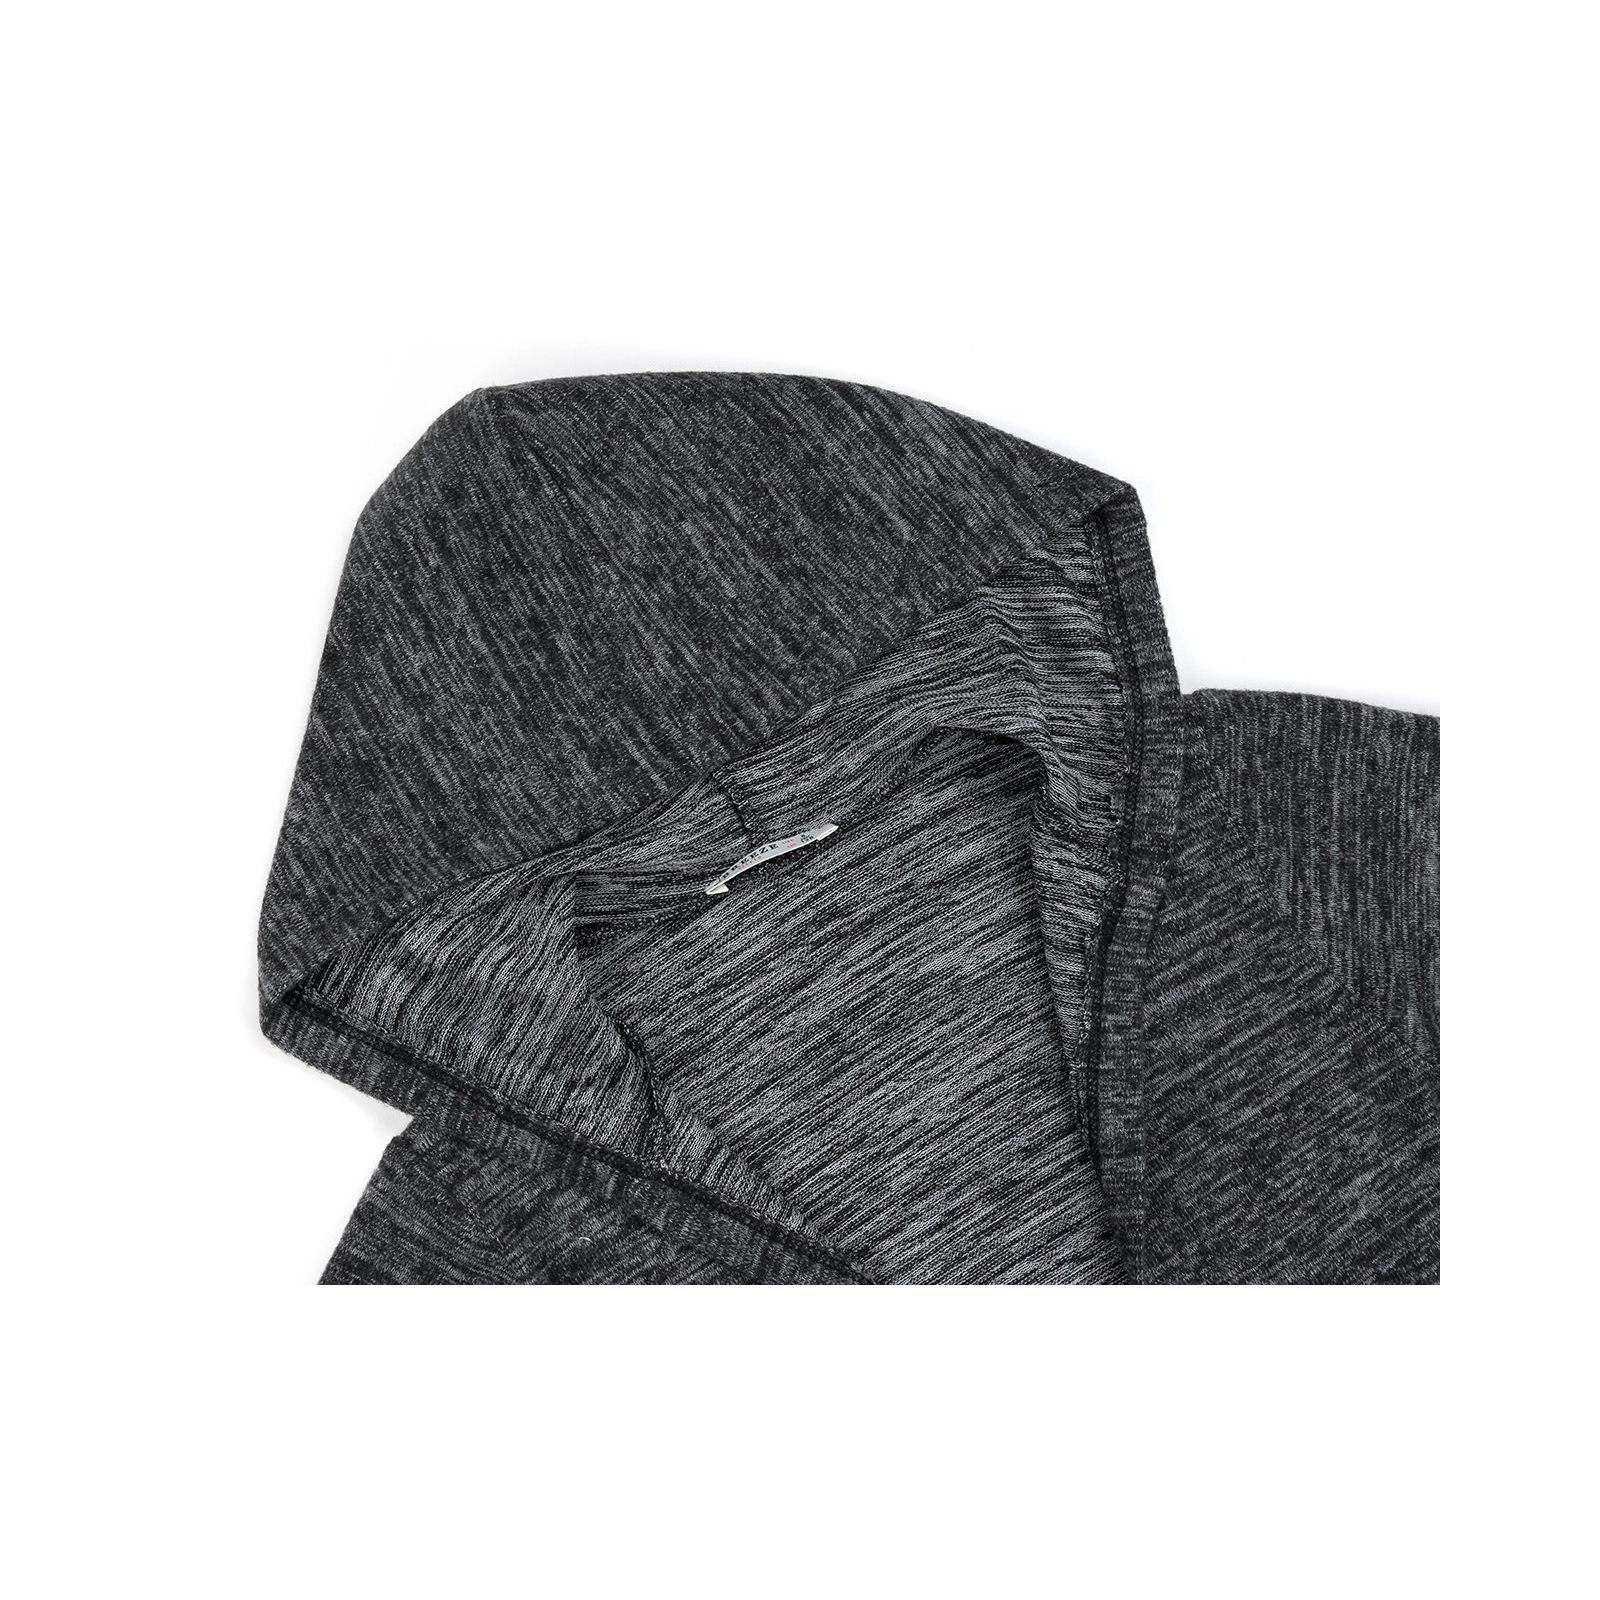 Кофта Breeze с капюшоном (7197-140G-darkgray) изображение 4